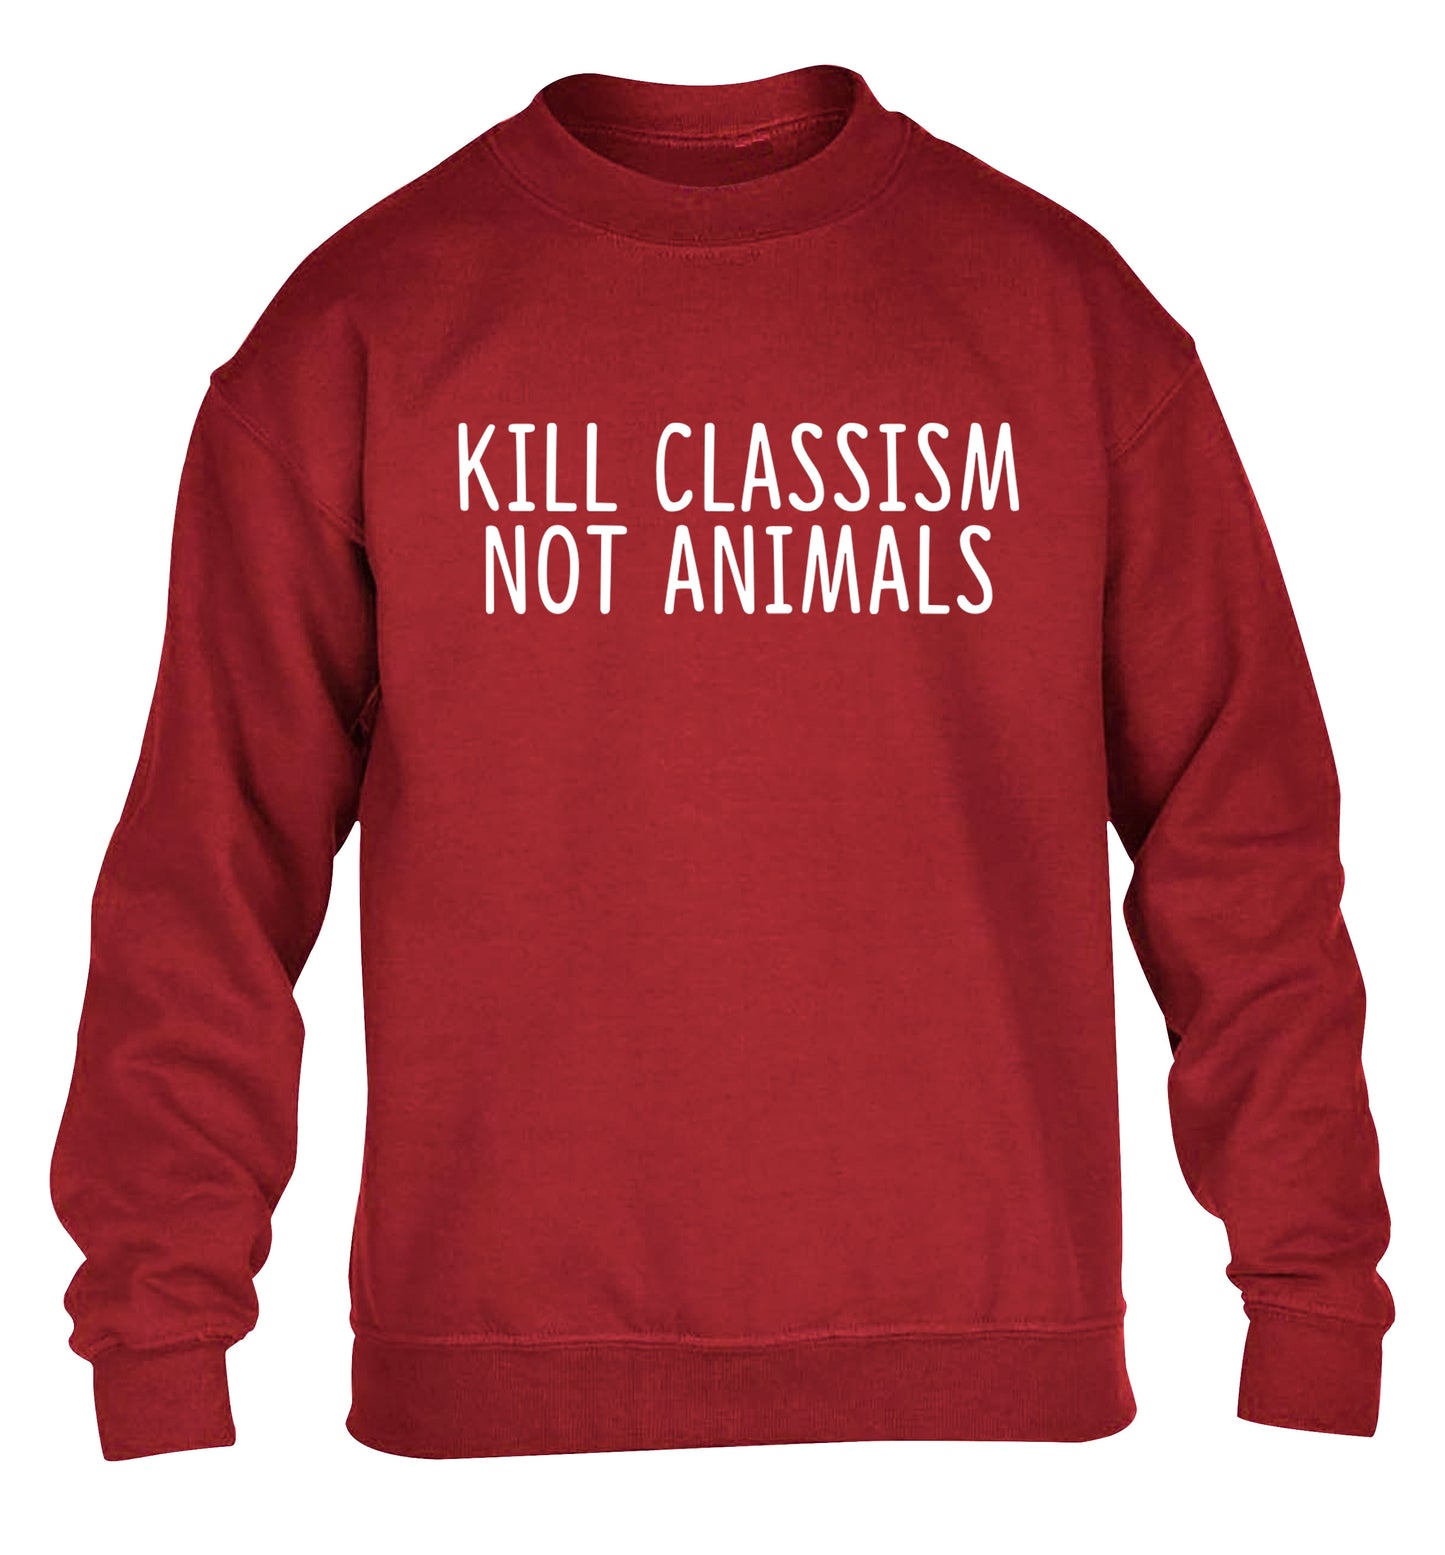 Kill Classism Not Animals children's grey sweater 12-13 Years